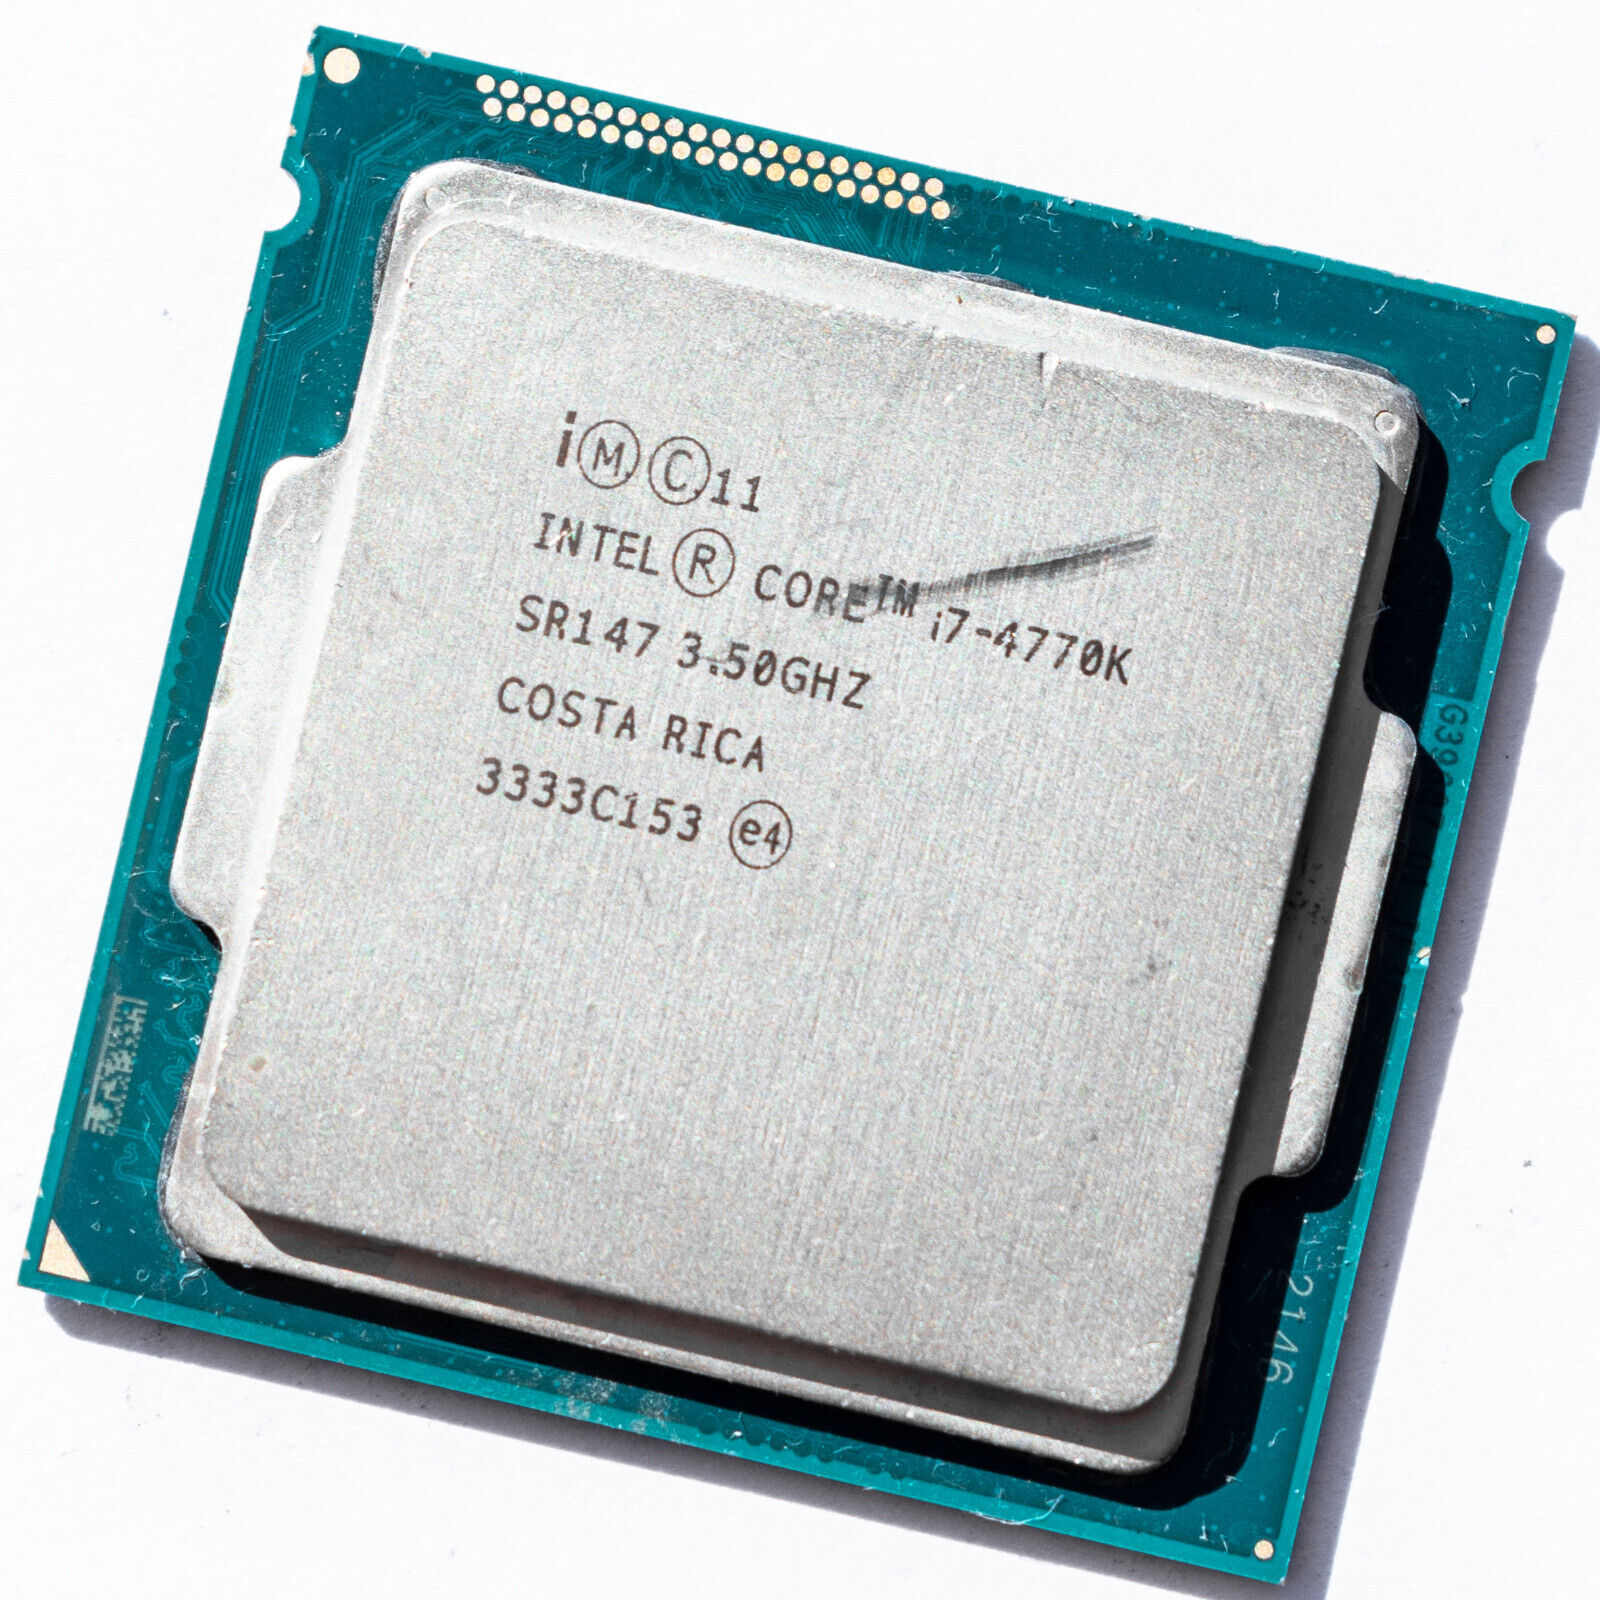 Intel Core i7-4770K SR147 LGA1150 3.5GHz Quad Core Processor Unlocked Haswell